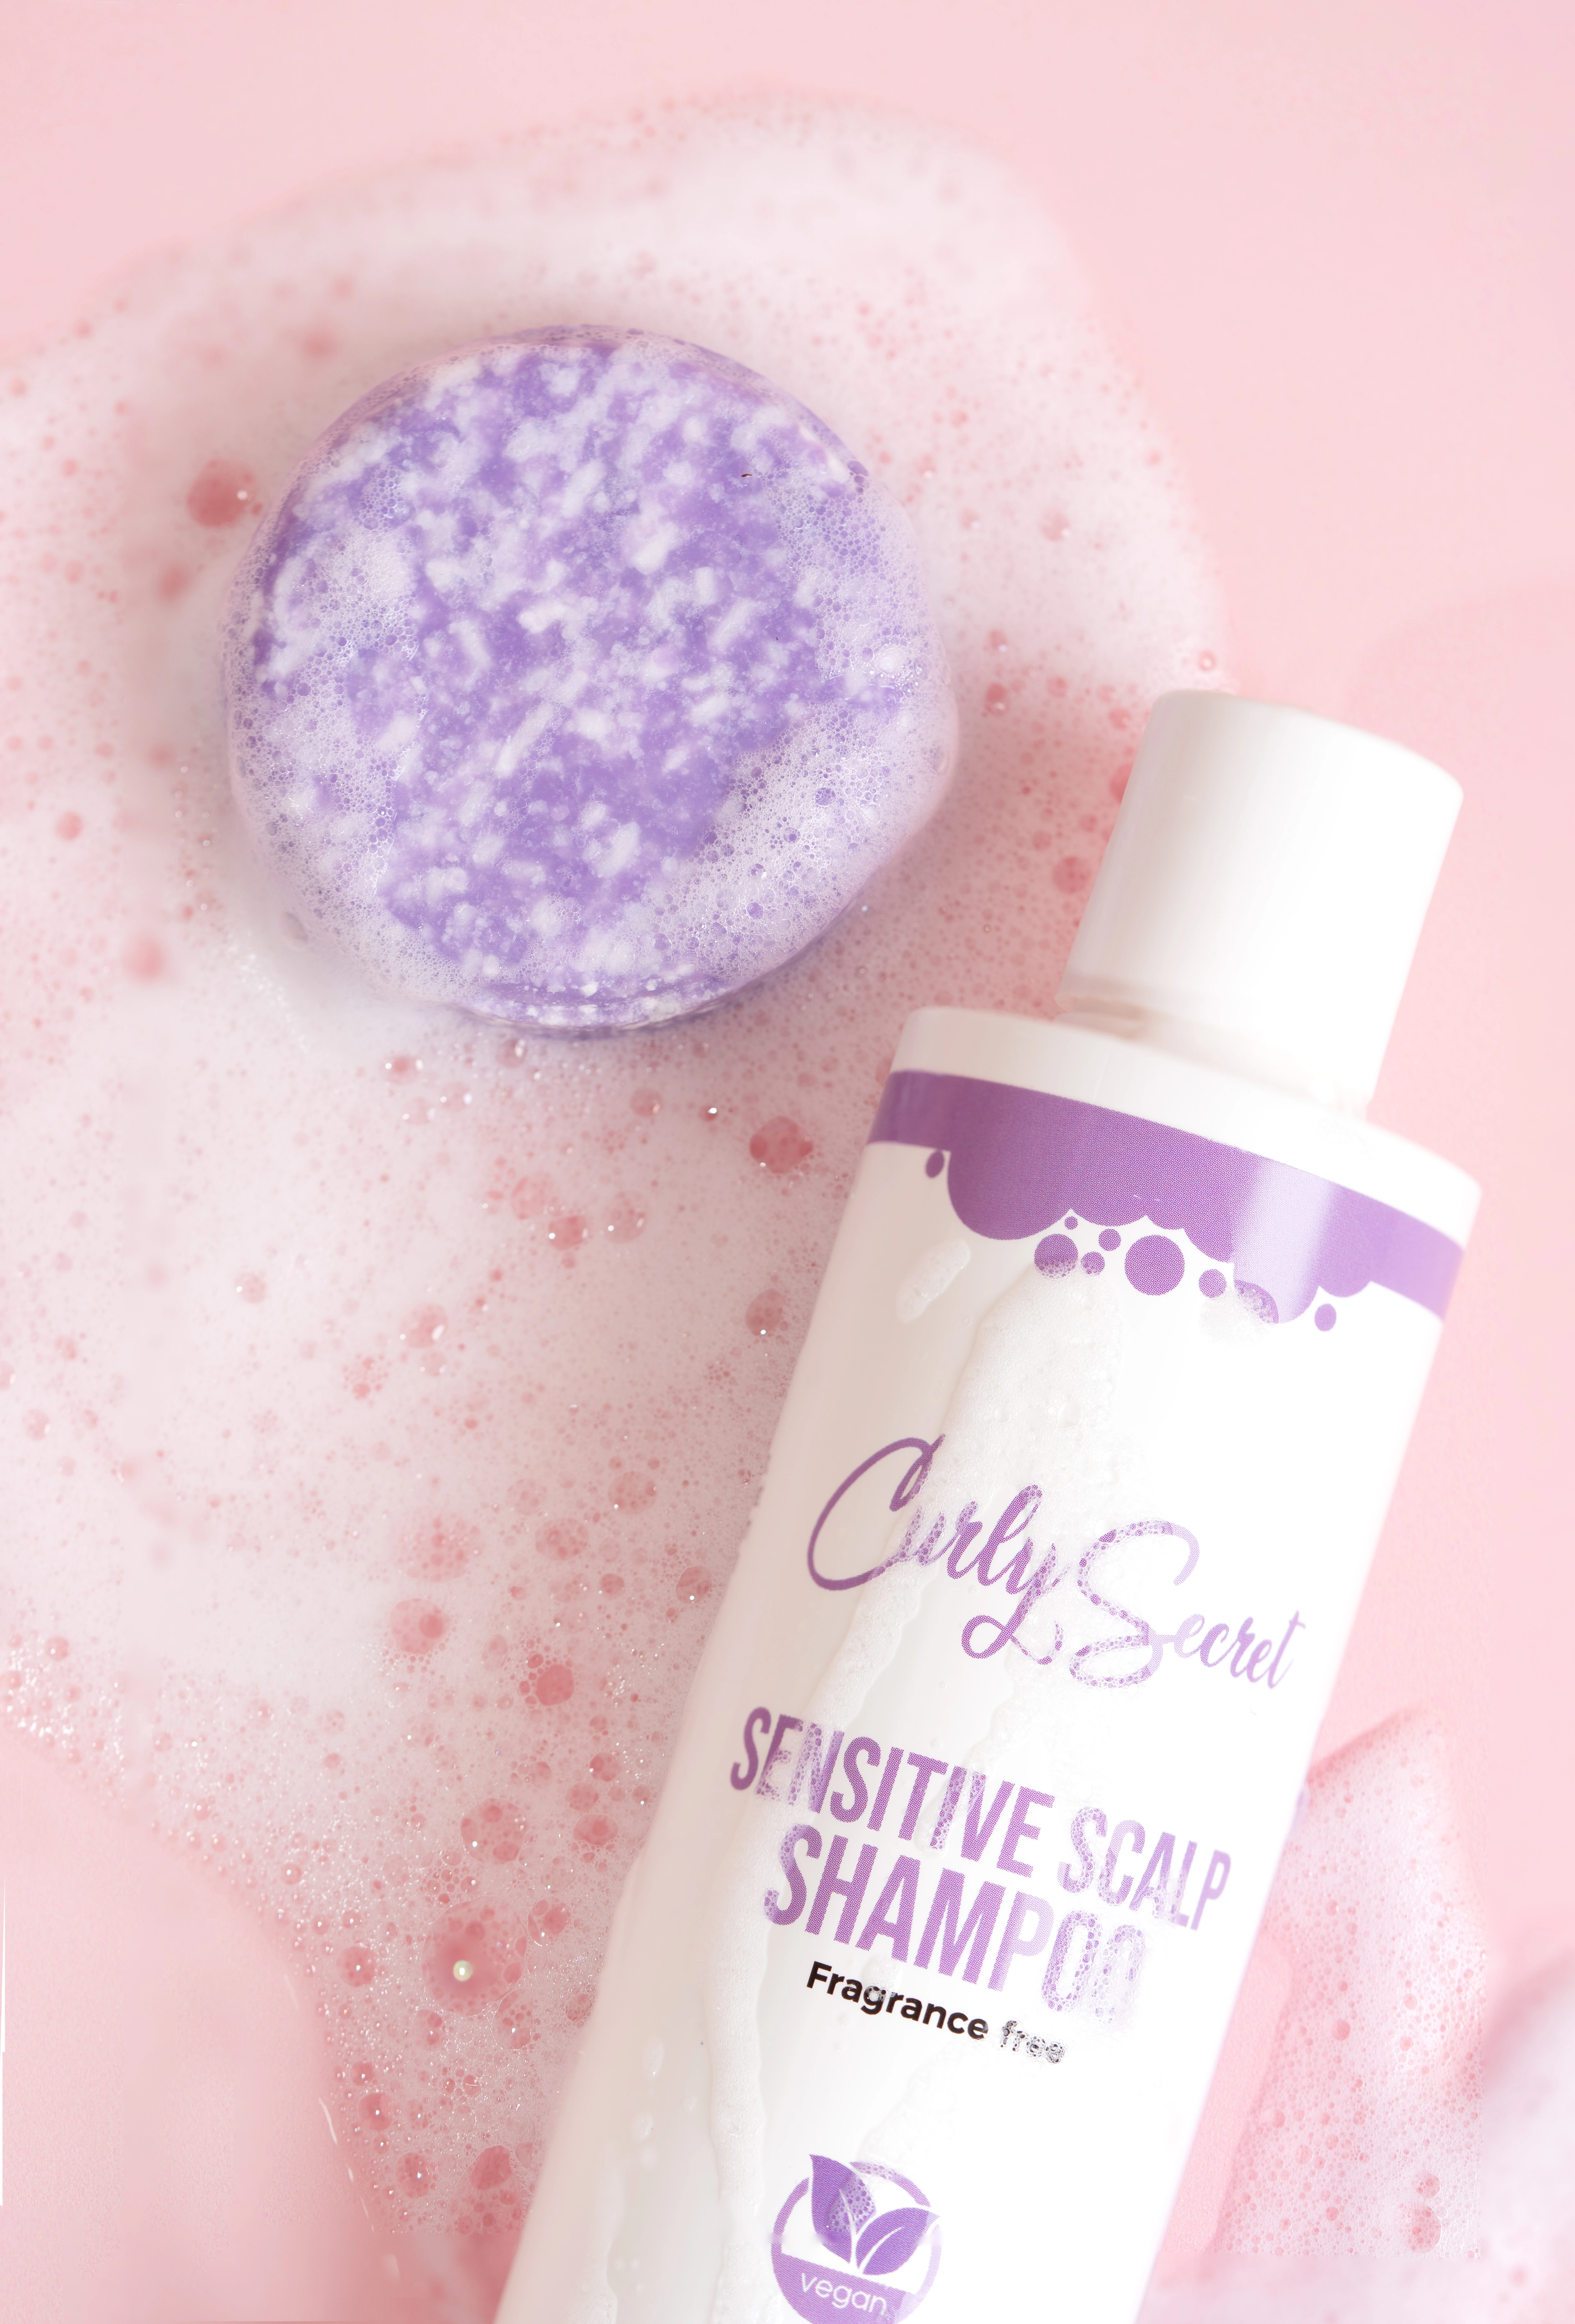 Curly Secret Sensitive Scalp Shampoo - Fragrance Free